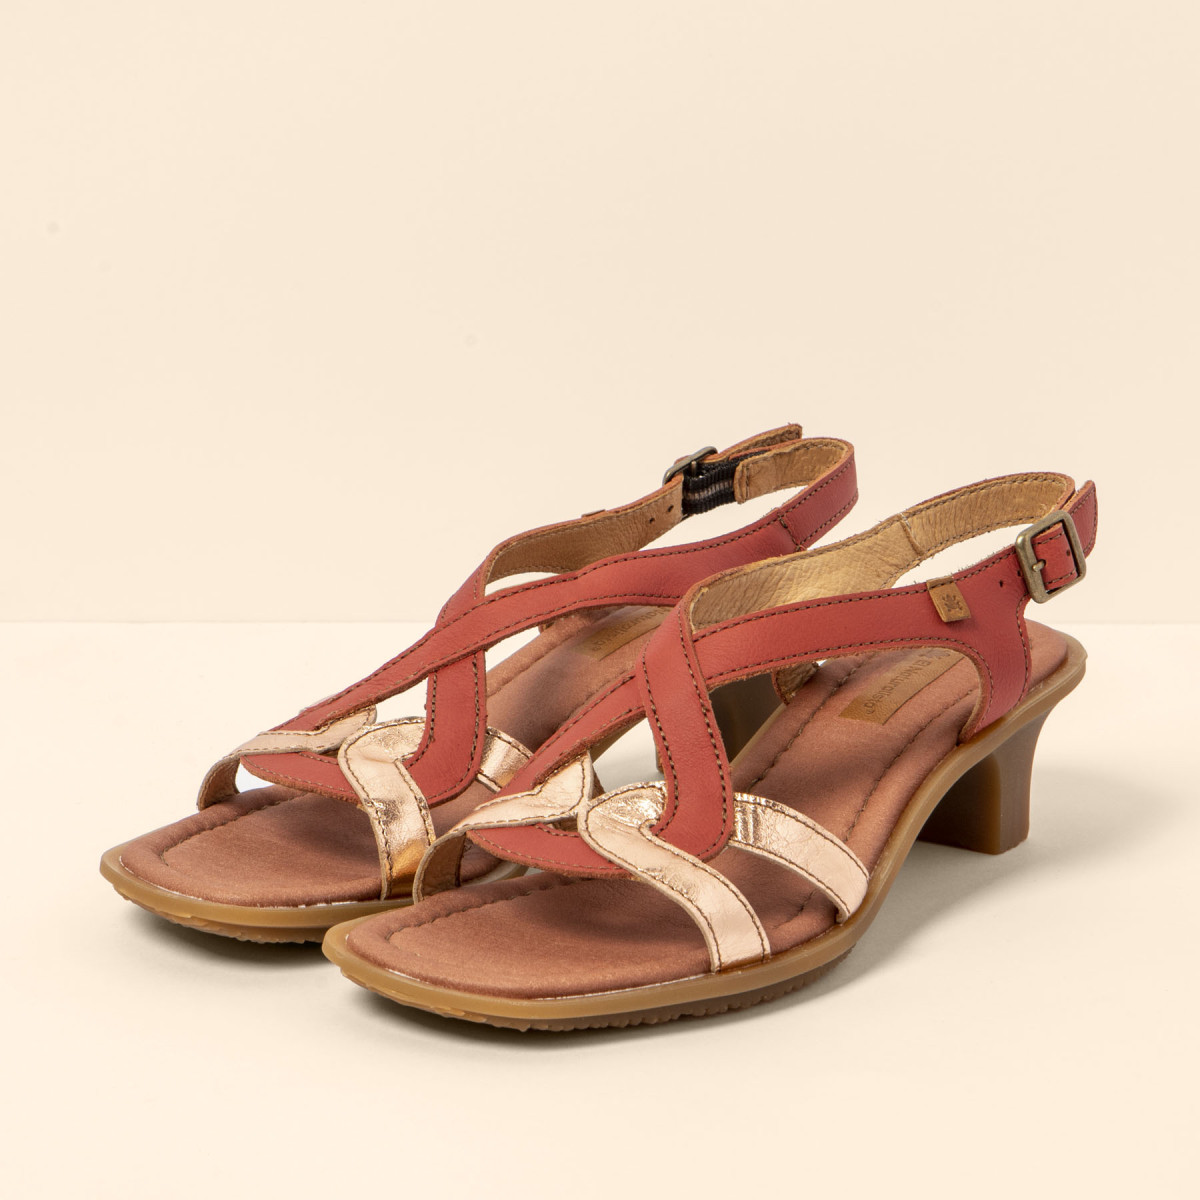 Sandales confortables en cuir tréssé à petit talon - Rose - El naturalista